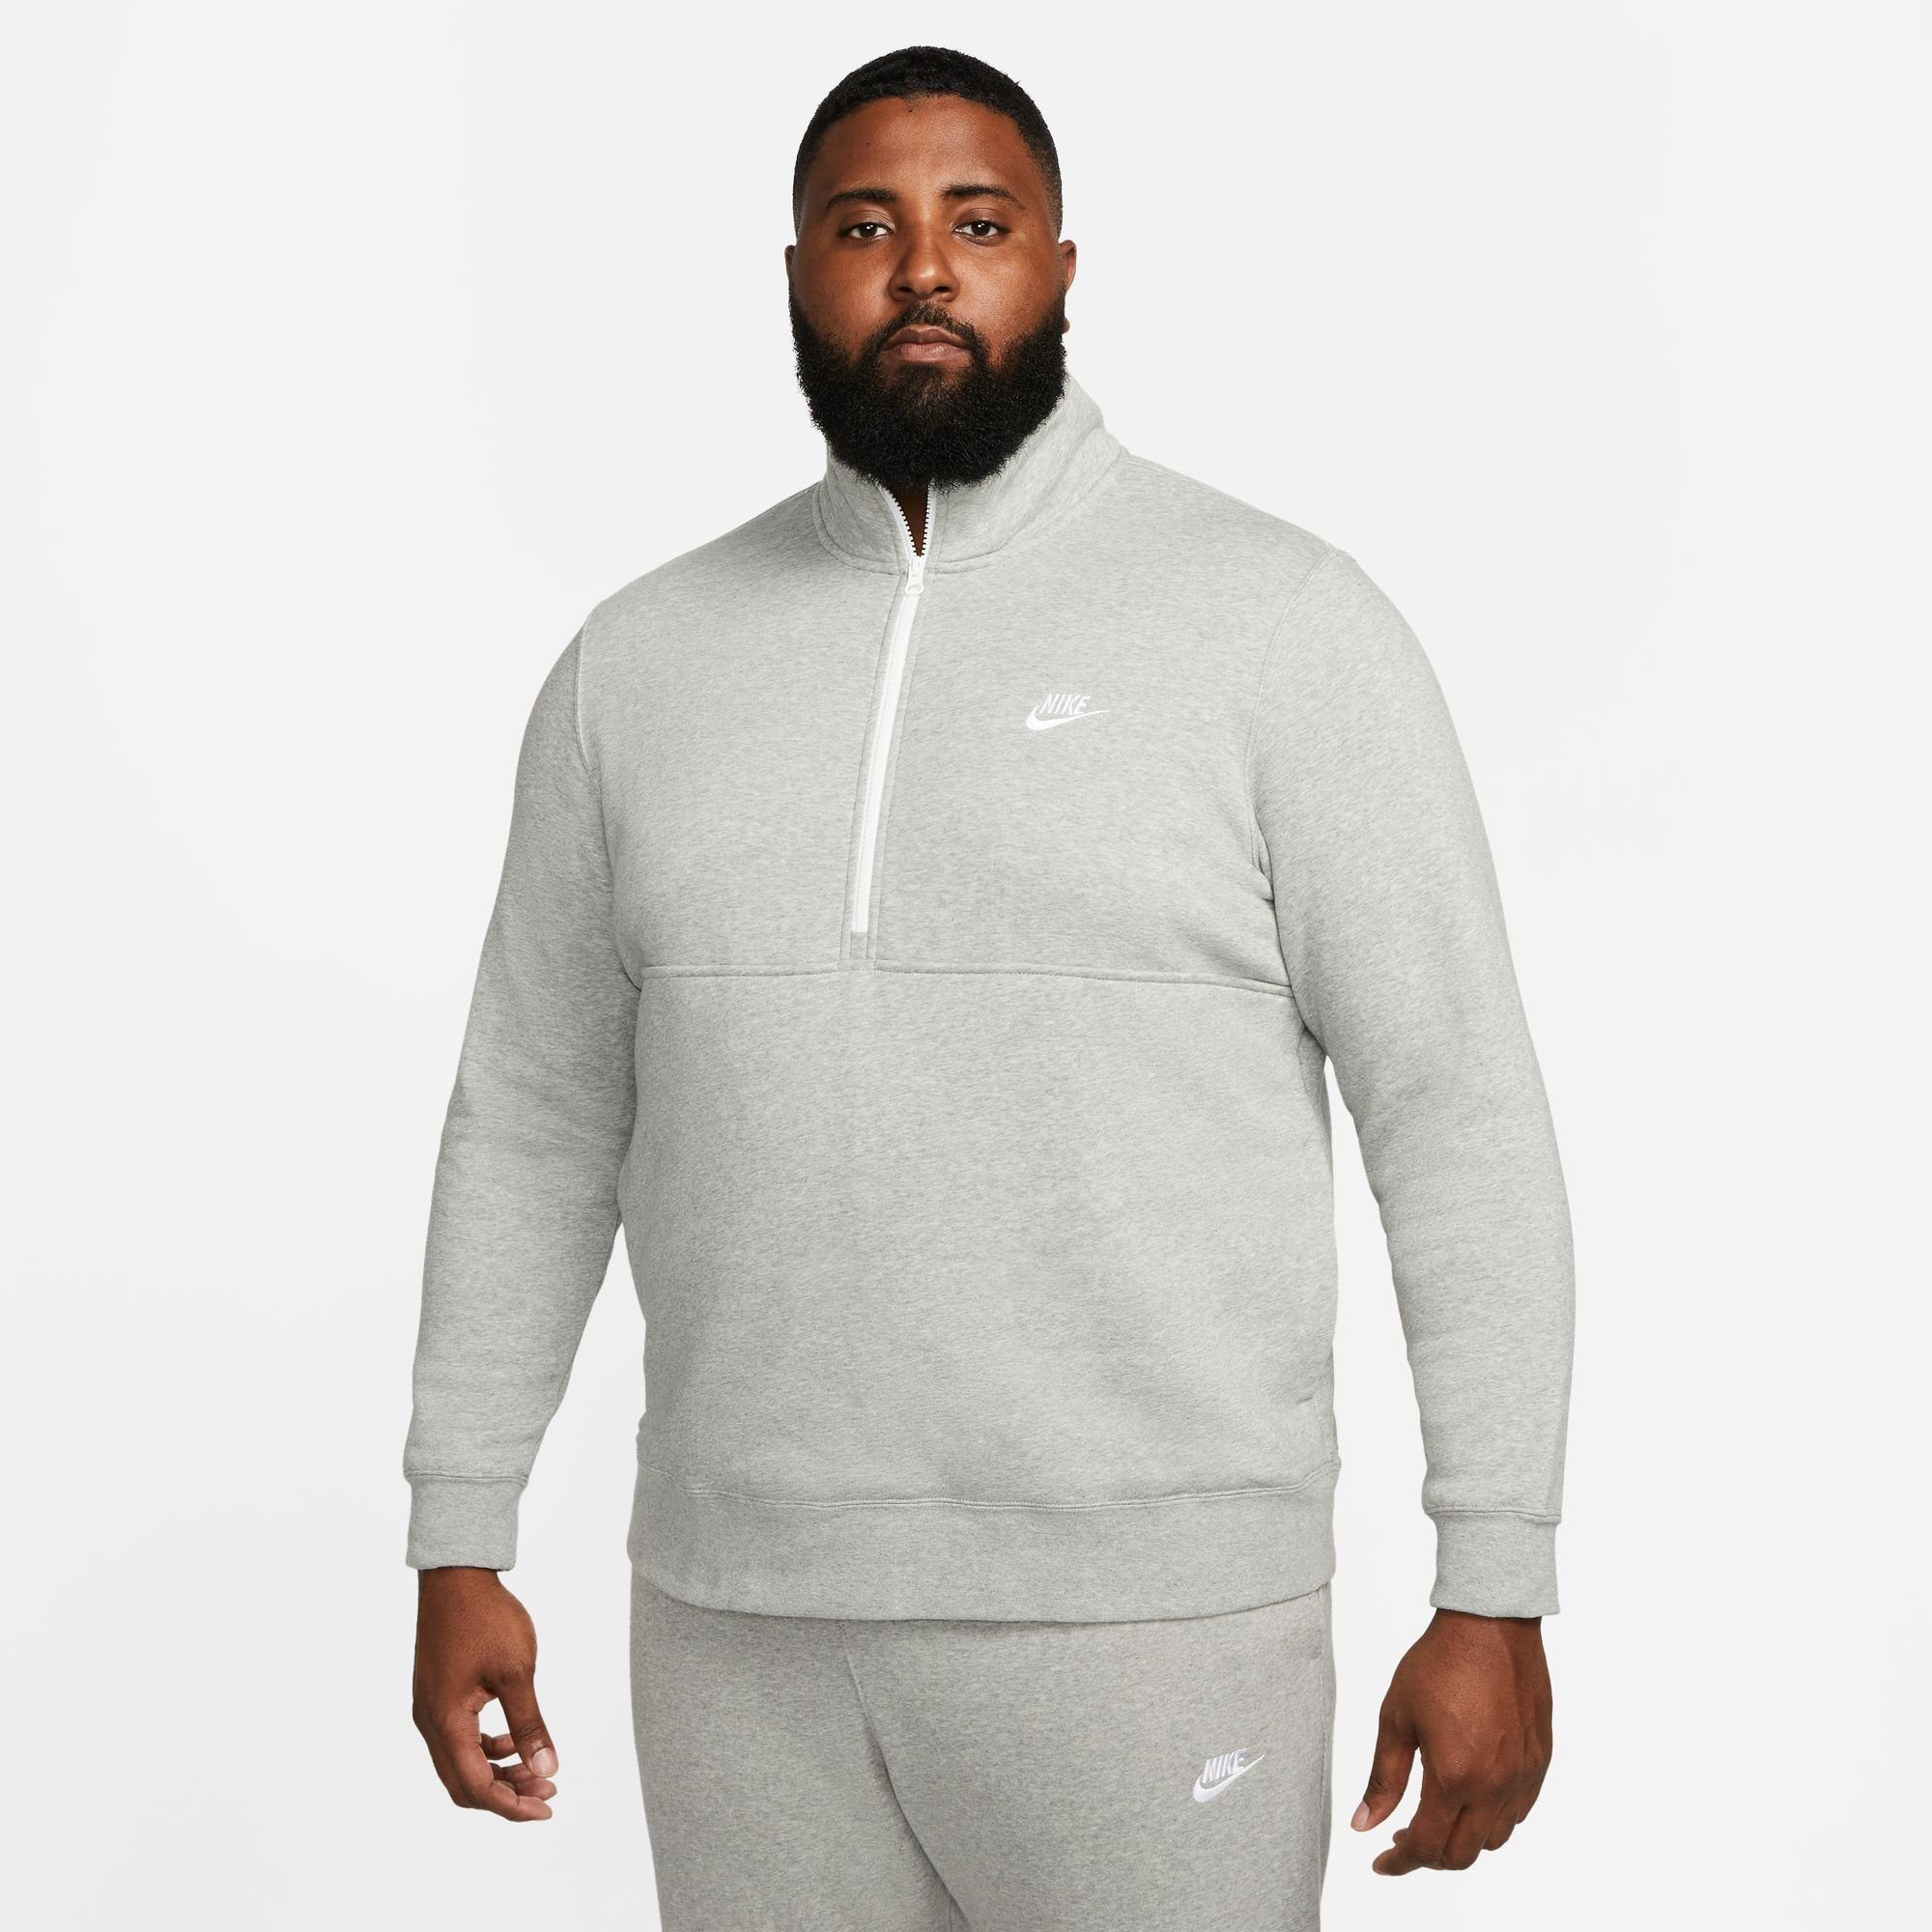 HEATHER/WHITE/WHITE PULLOVER CLUB Nike Sportswear MEN'S Sweatshirt 1/-ZIP DK GREY BRUSHED-BACK